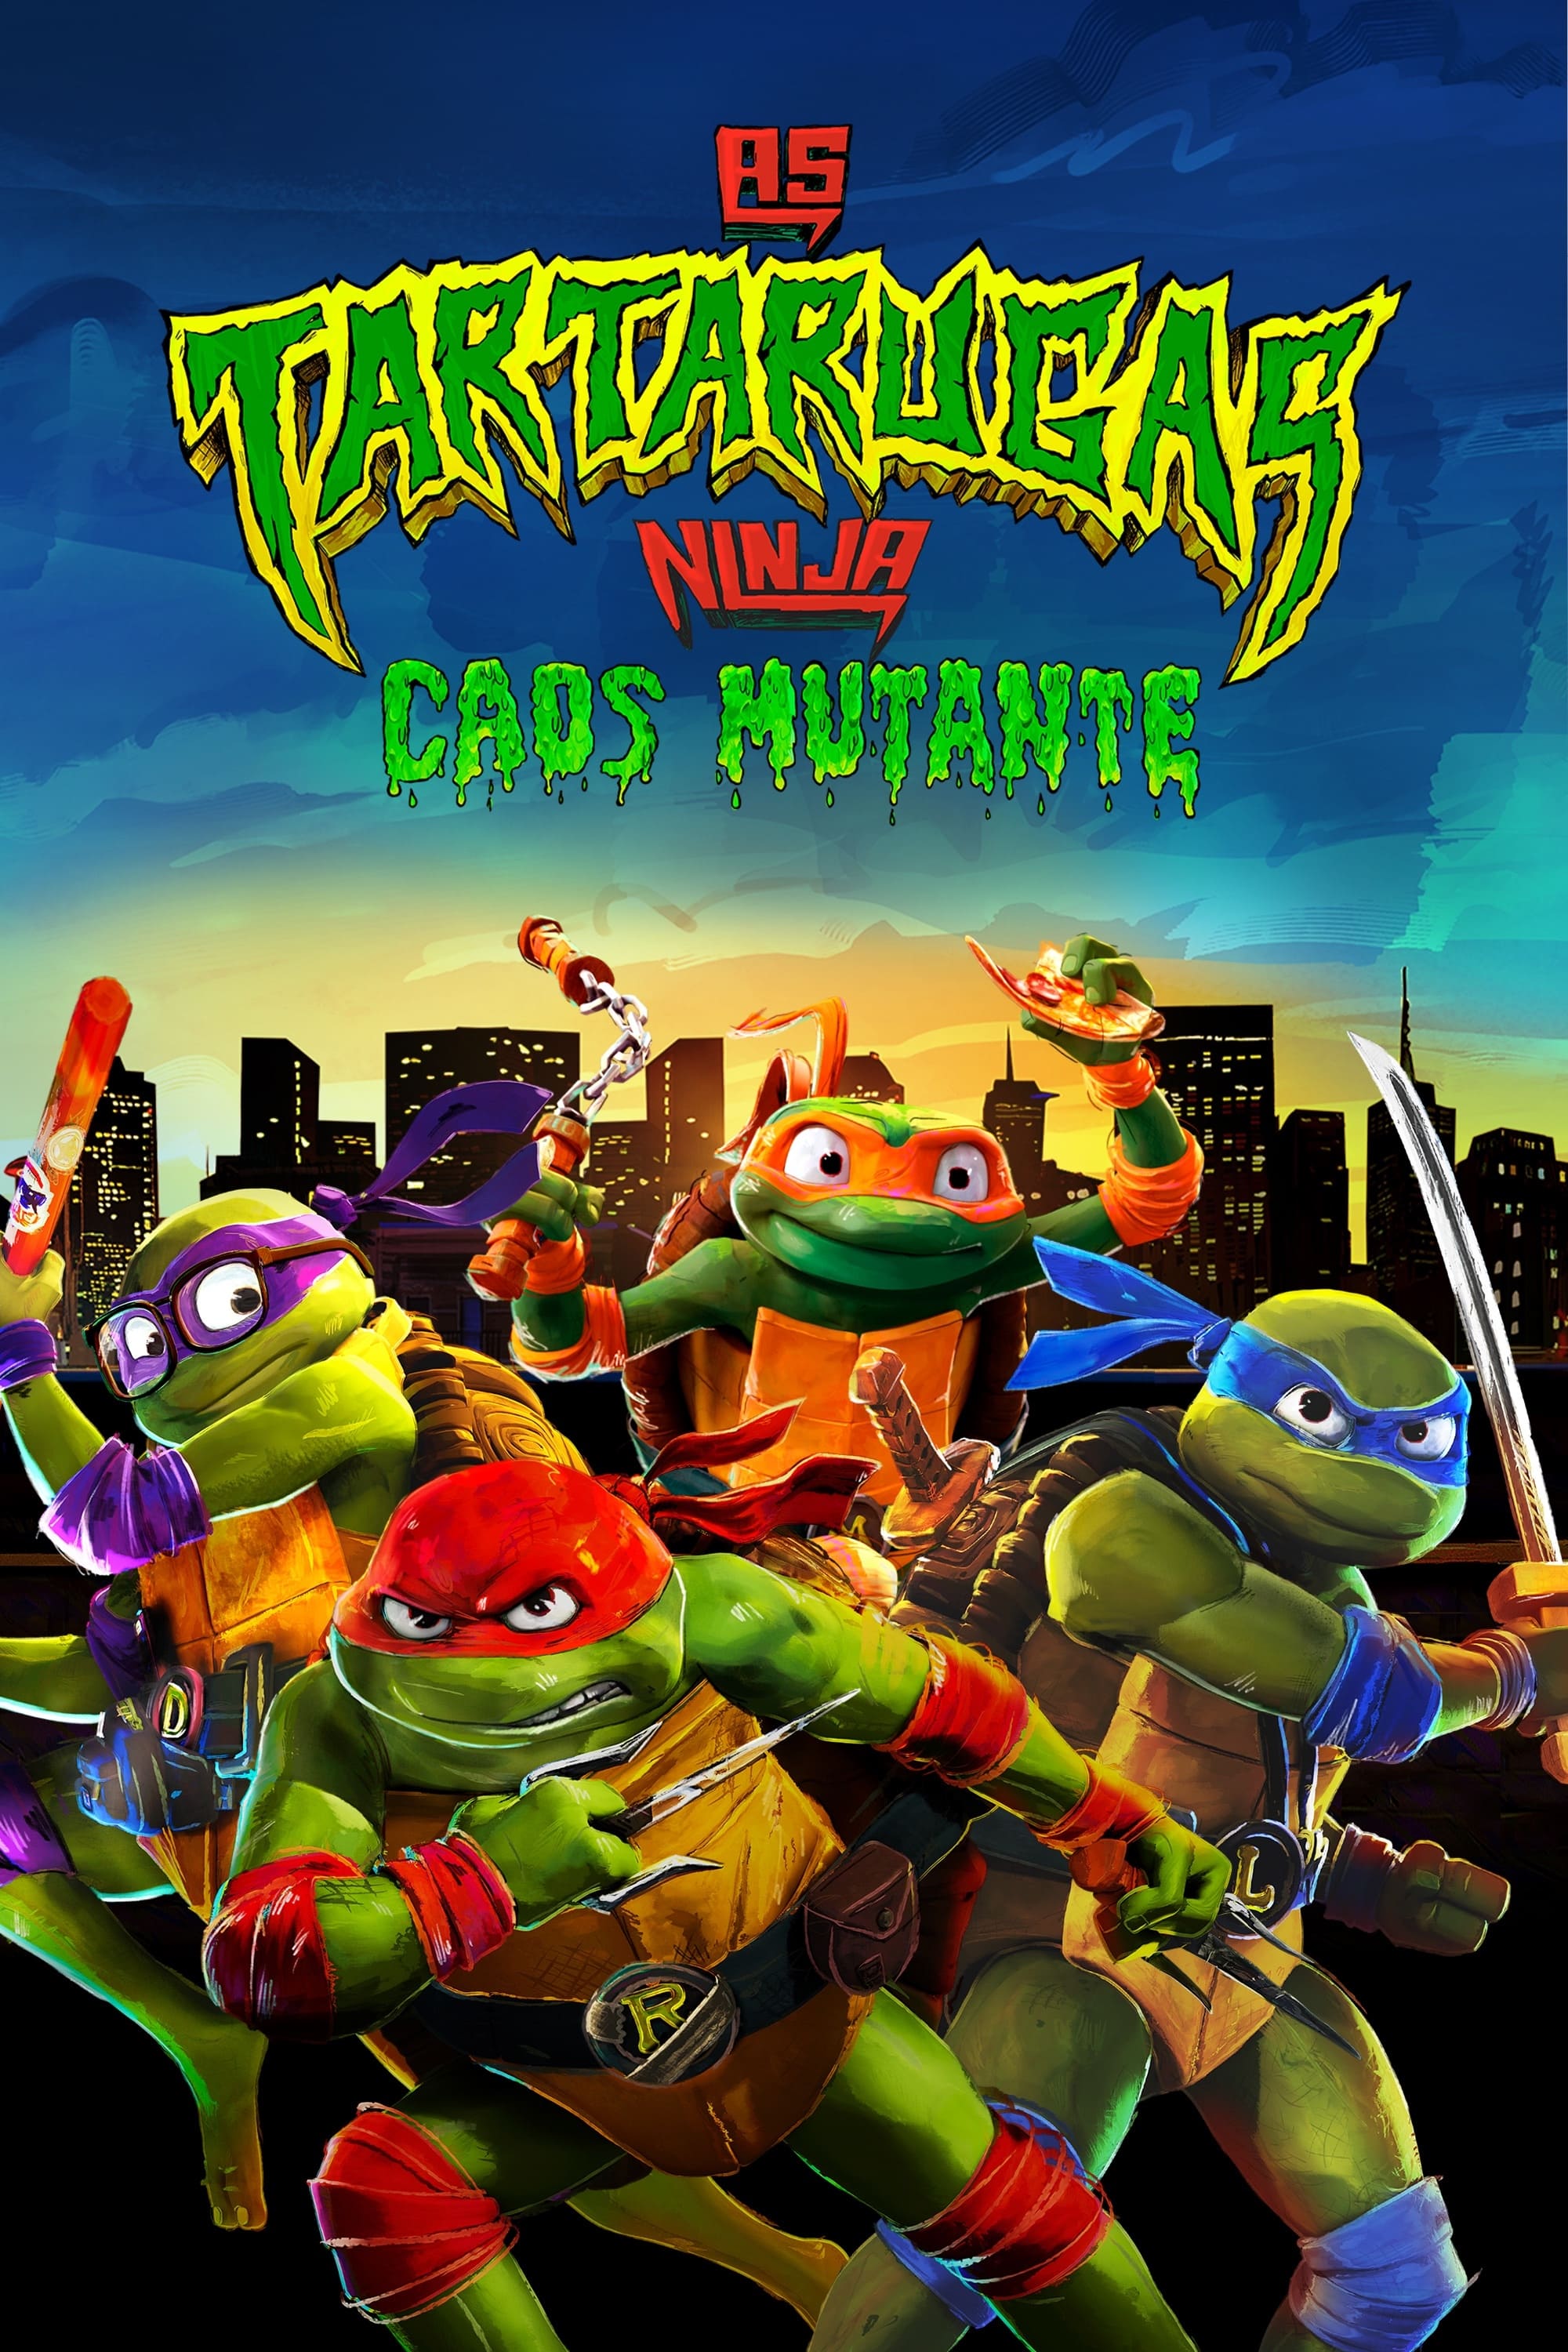 As Tartarugas Ninja Online